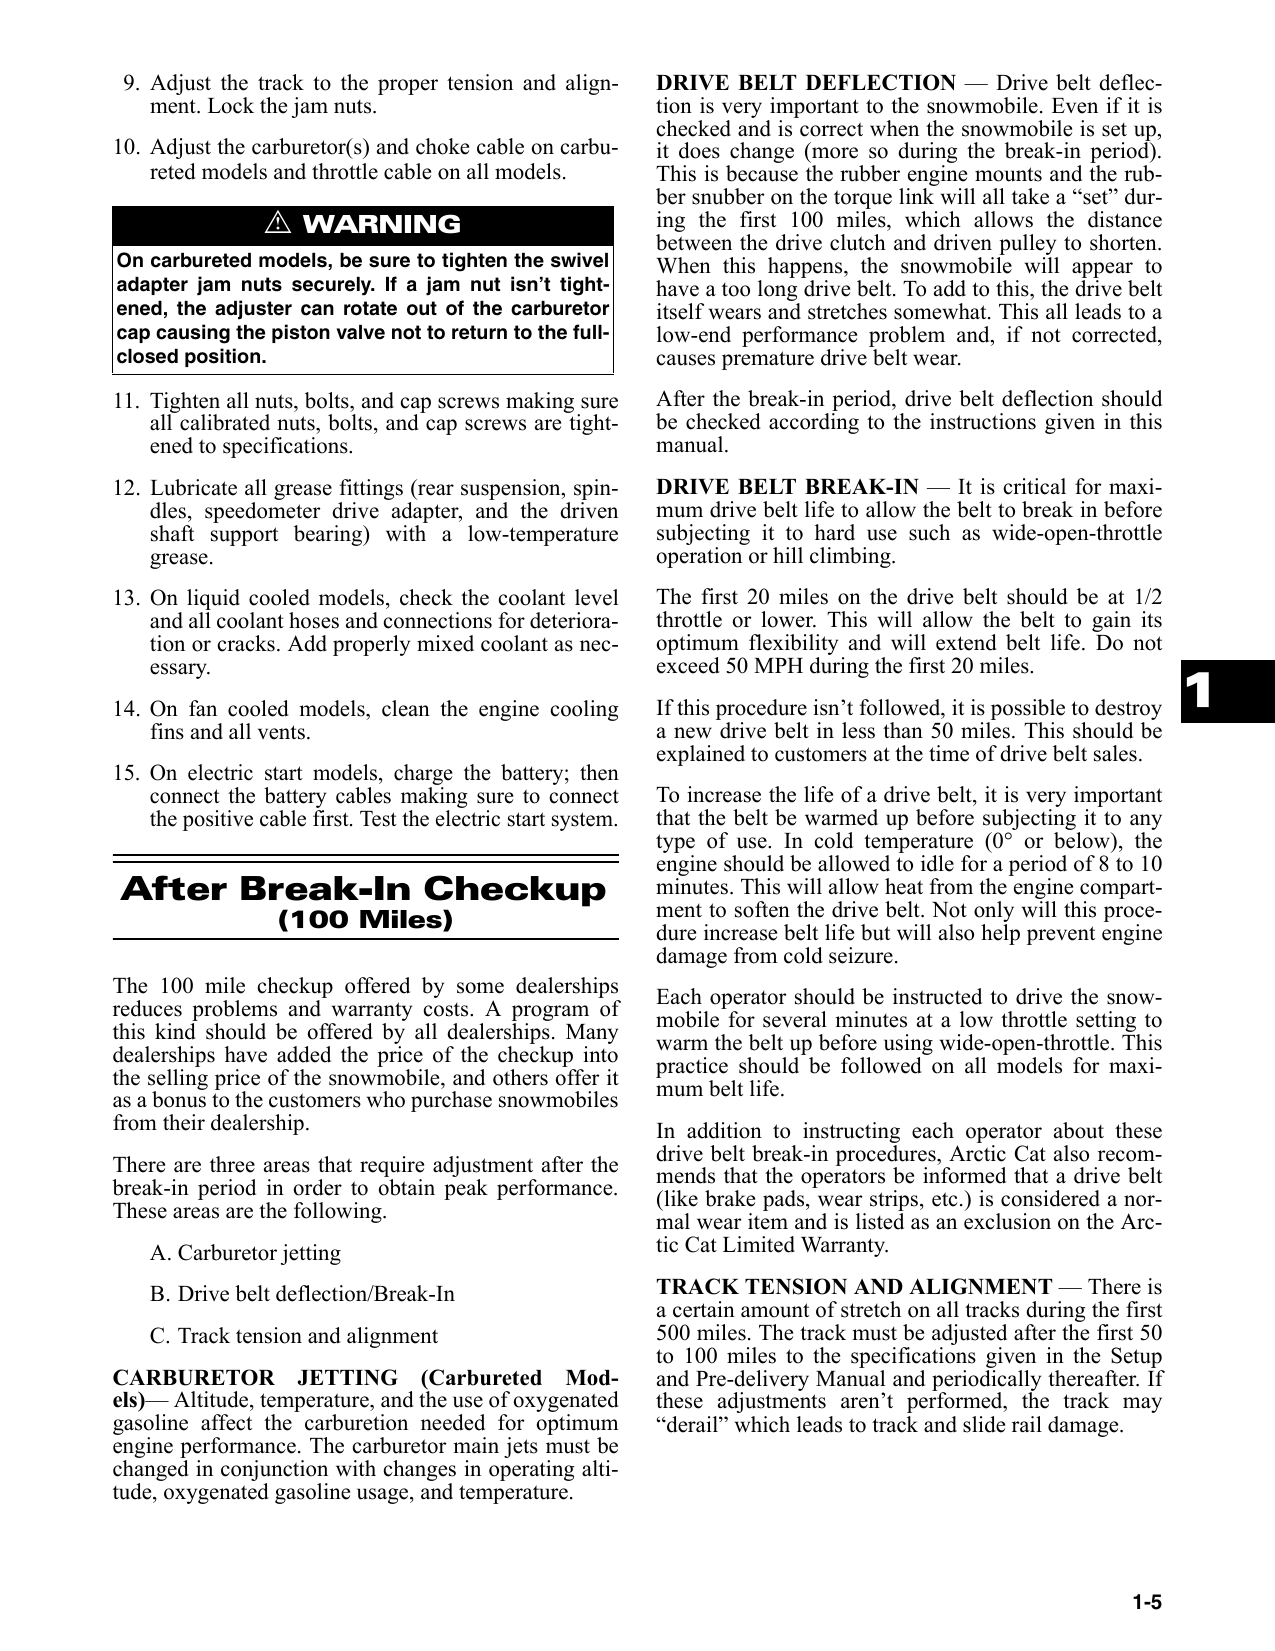 2007 Arctic Cat Snowmobile manual Preview image 5